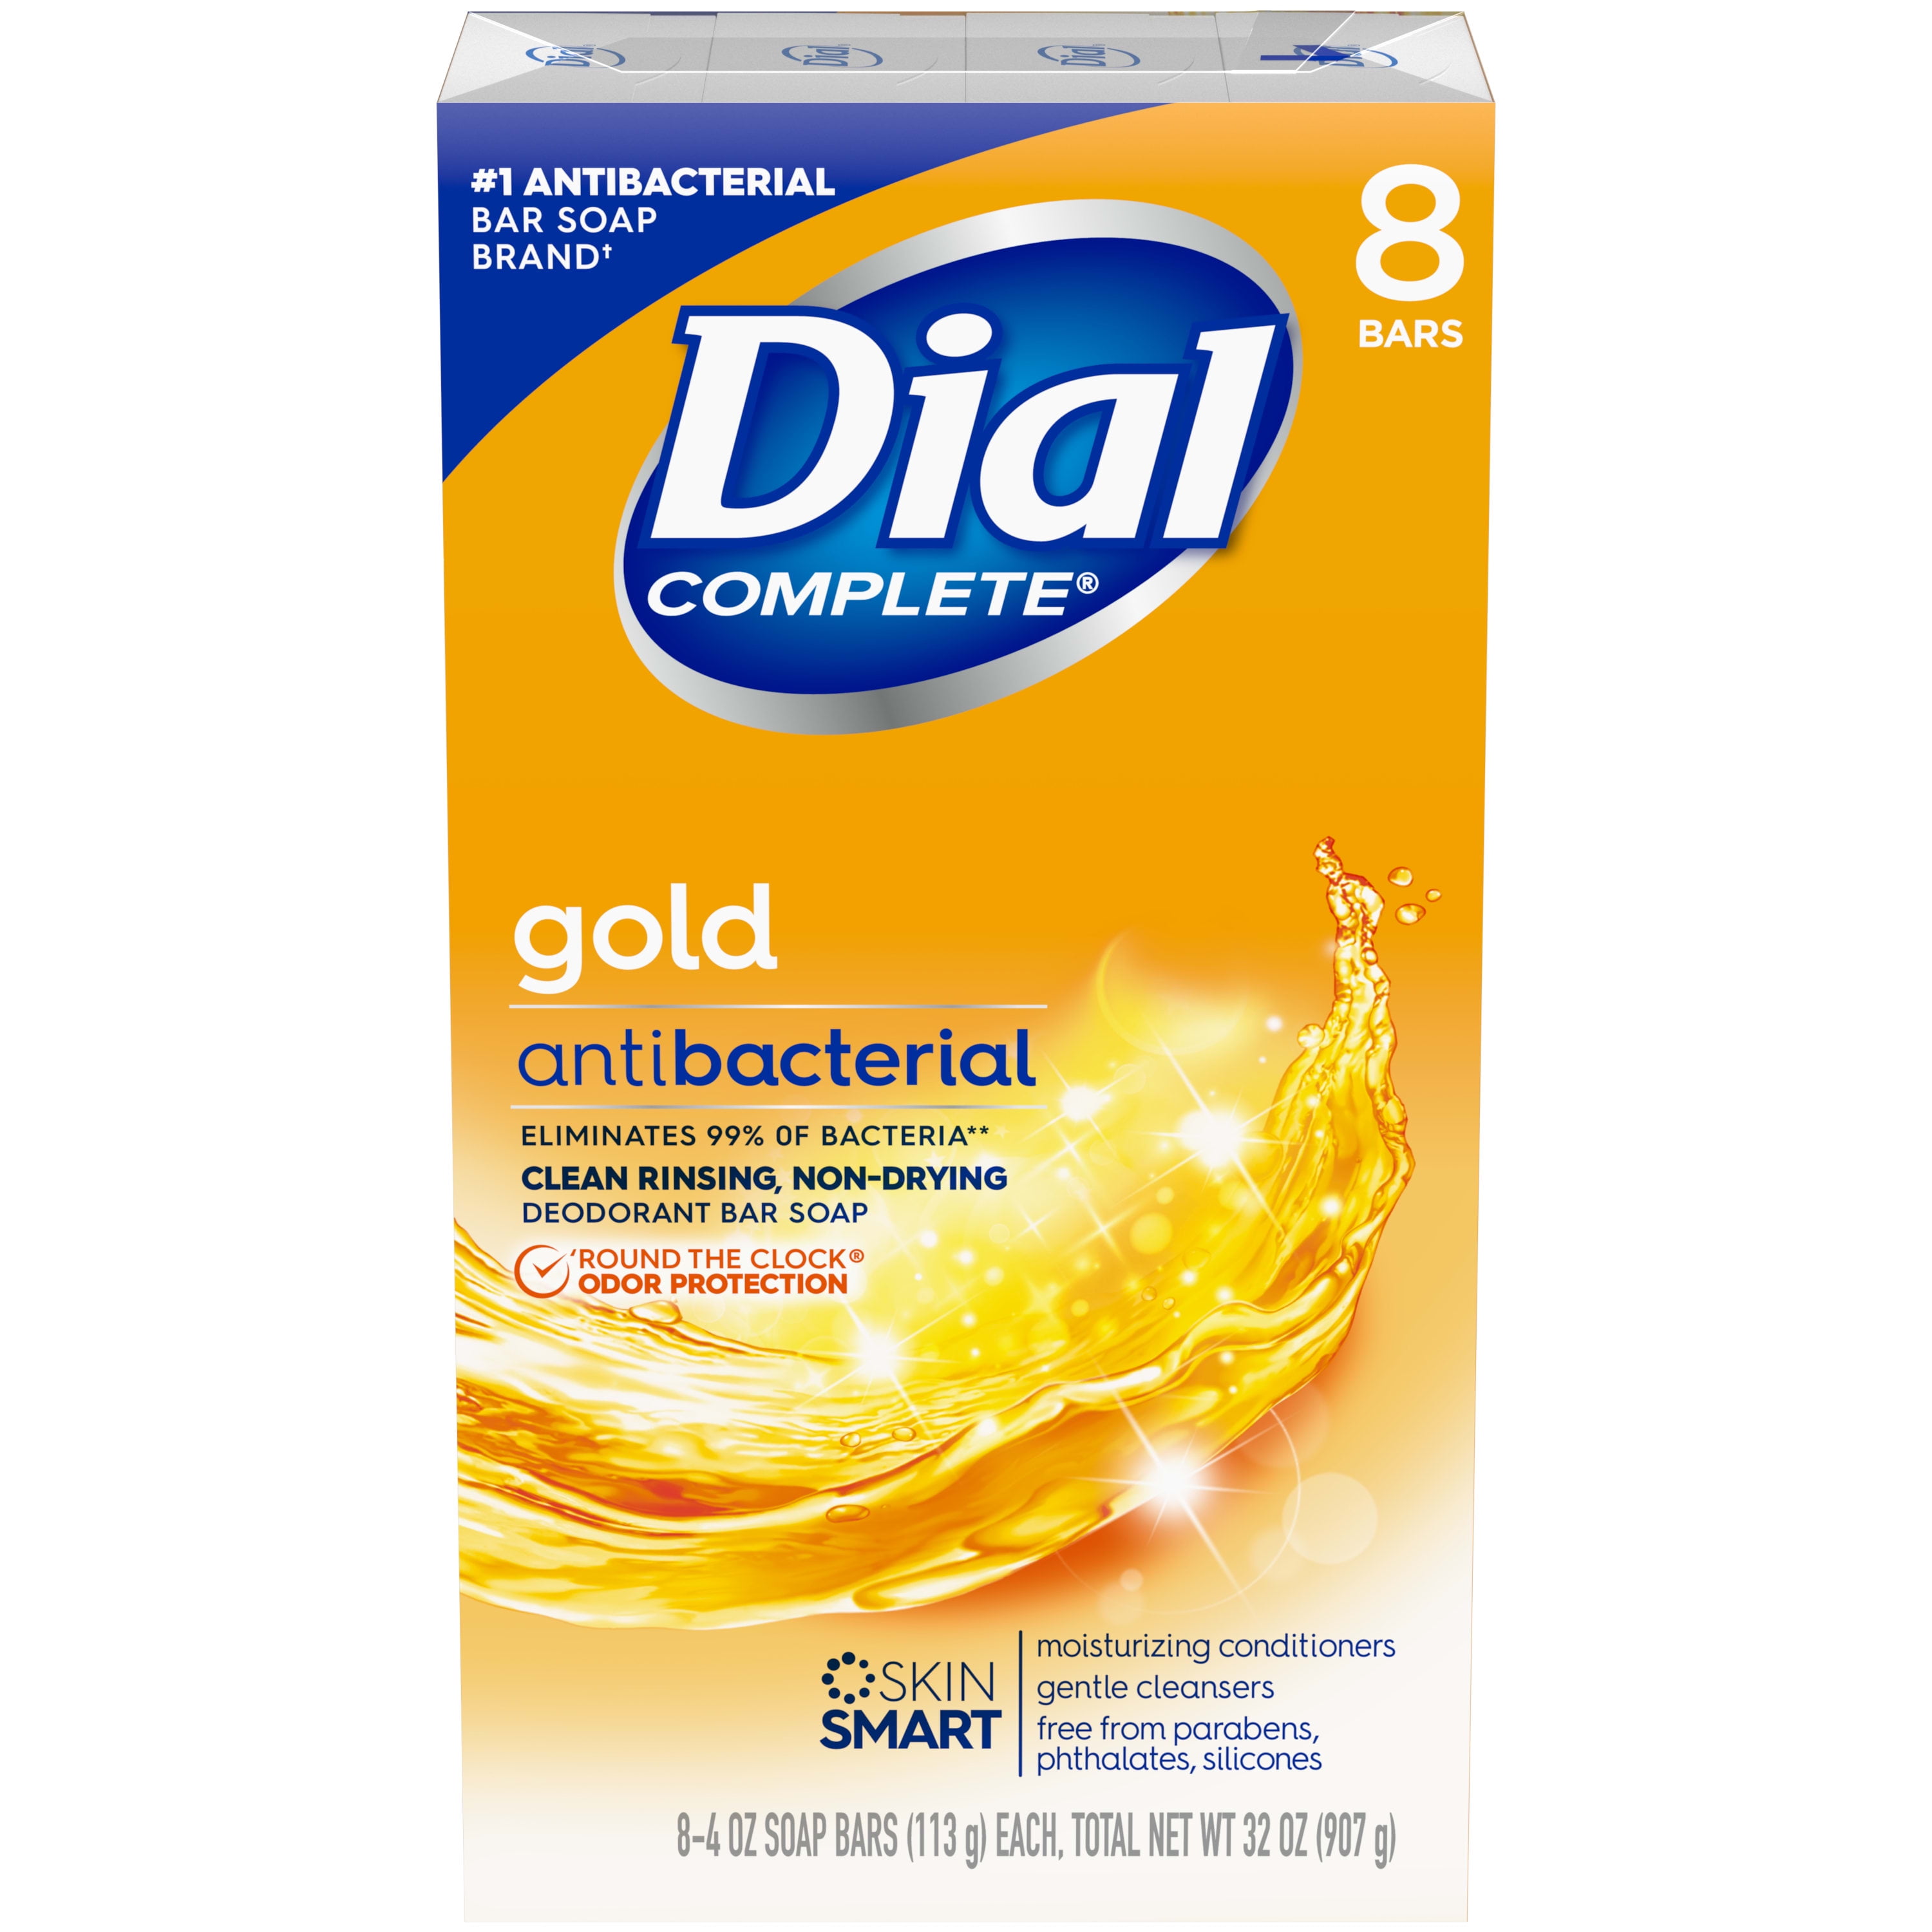 Dial Complete Antibacterial Deodorant Bar Soap, Gold, 4 oz, 8 Bars